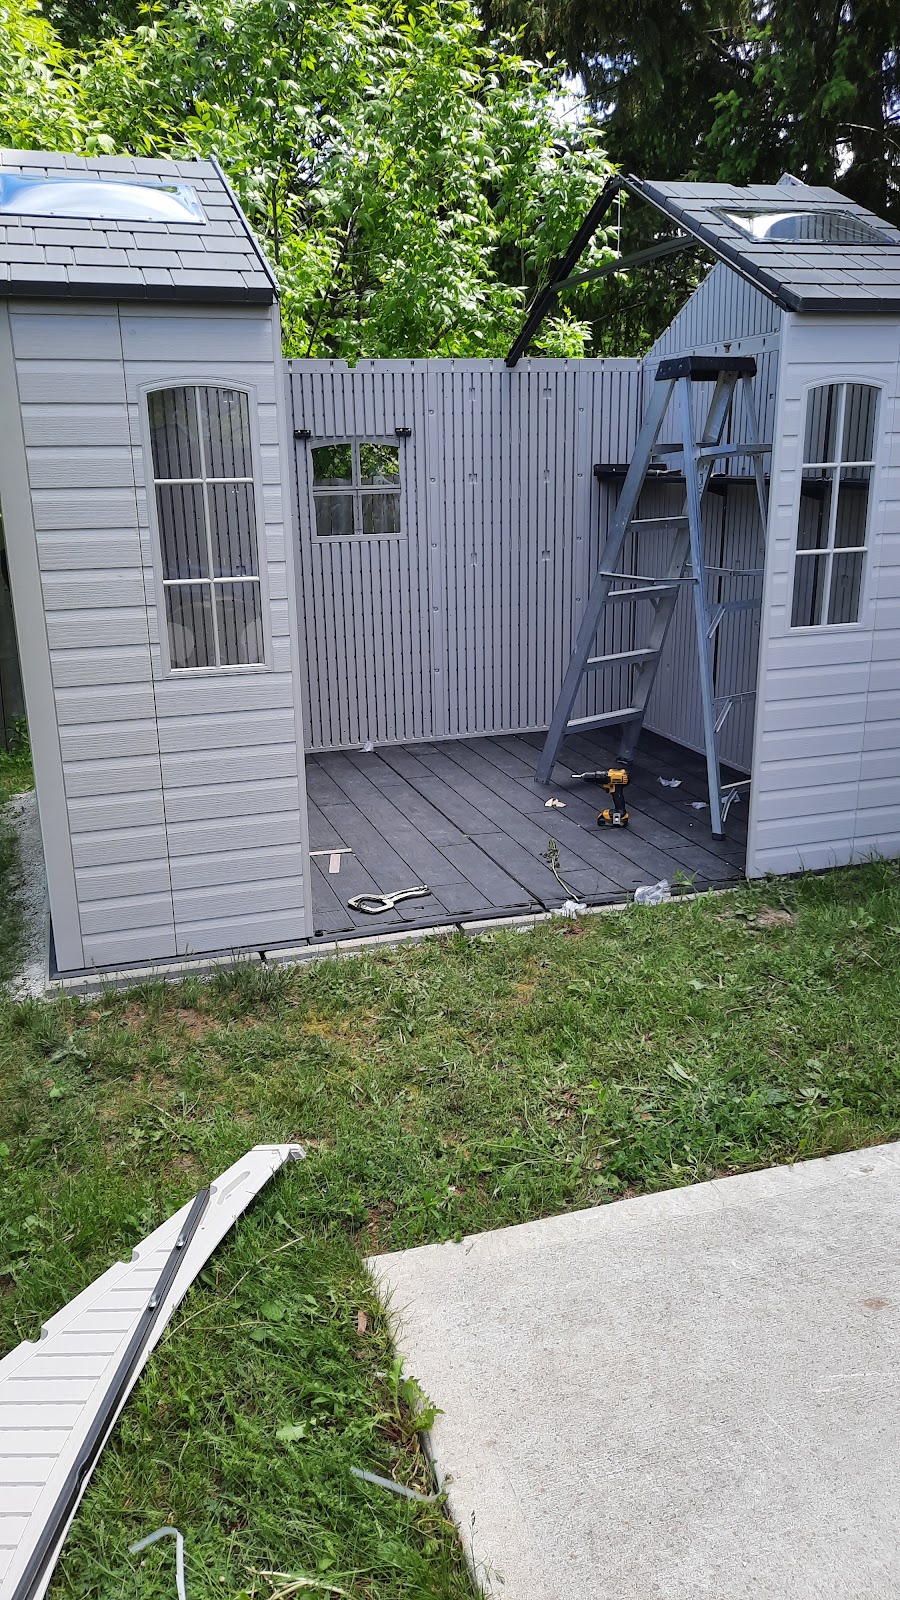 Impact Home Renovations | 432 Hidden Creek Dr, Kitchener, ON N2N 3N2, Canada | Phone: (519) 501-7929